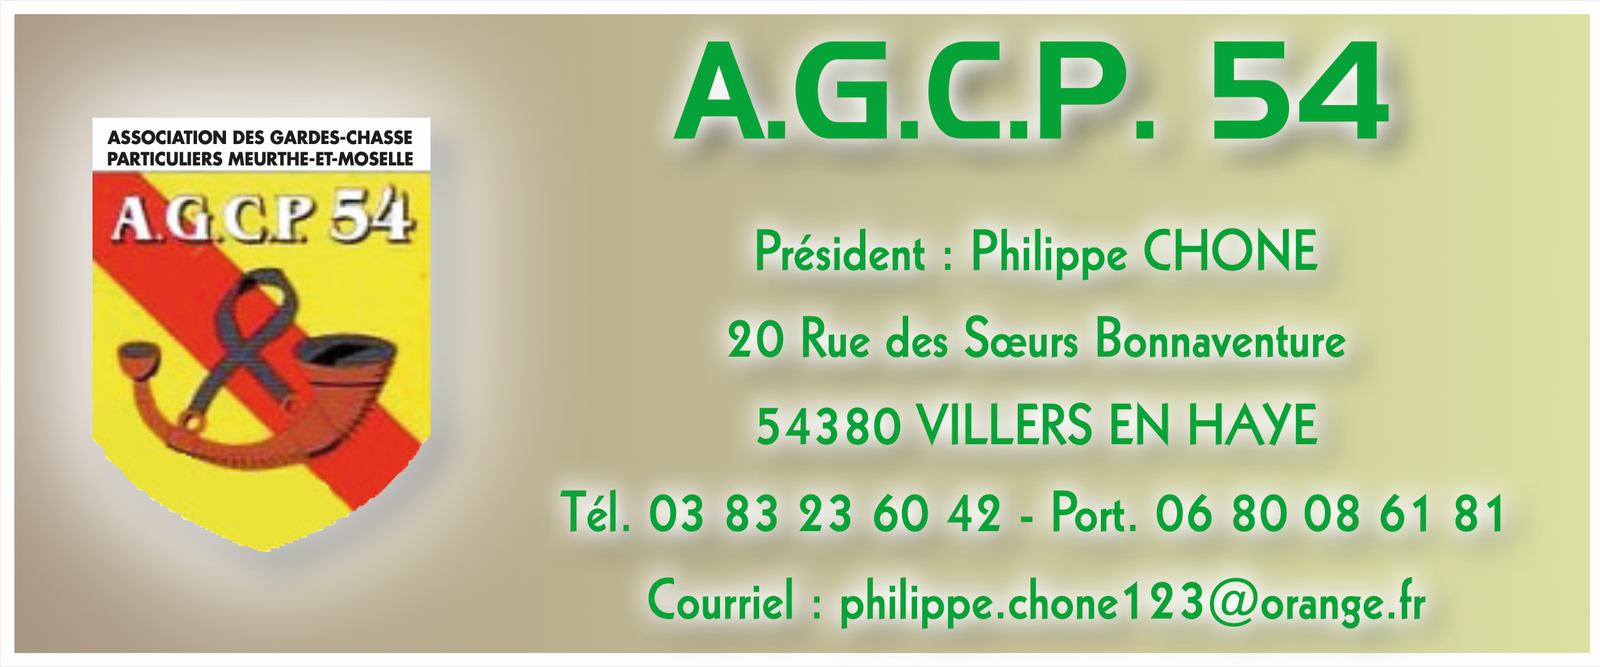 AGCP 54